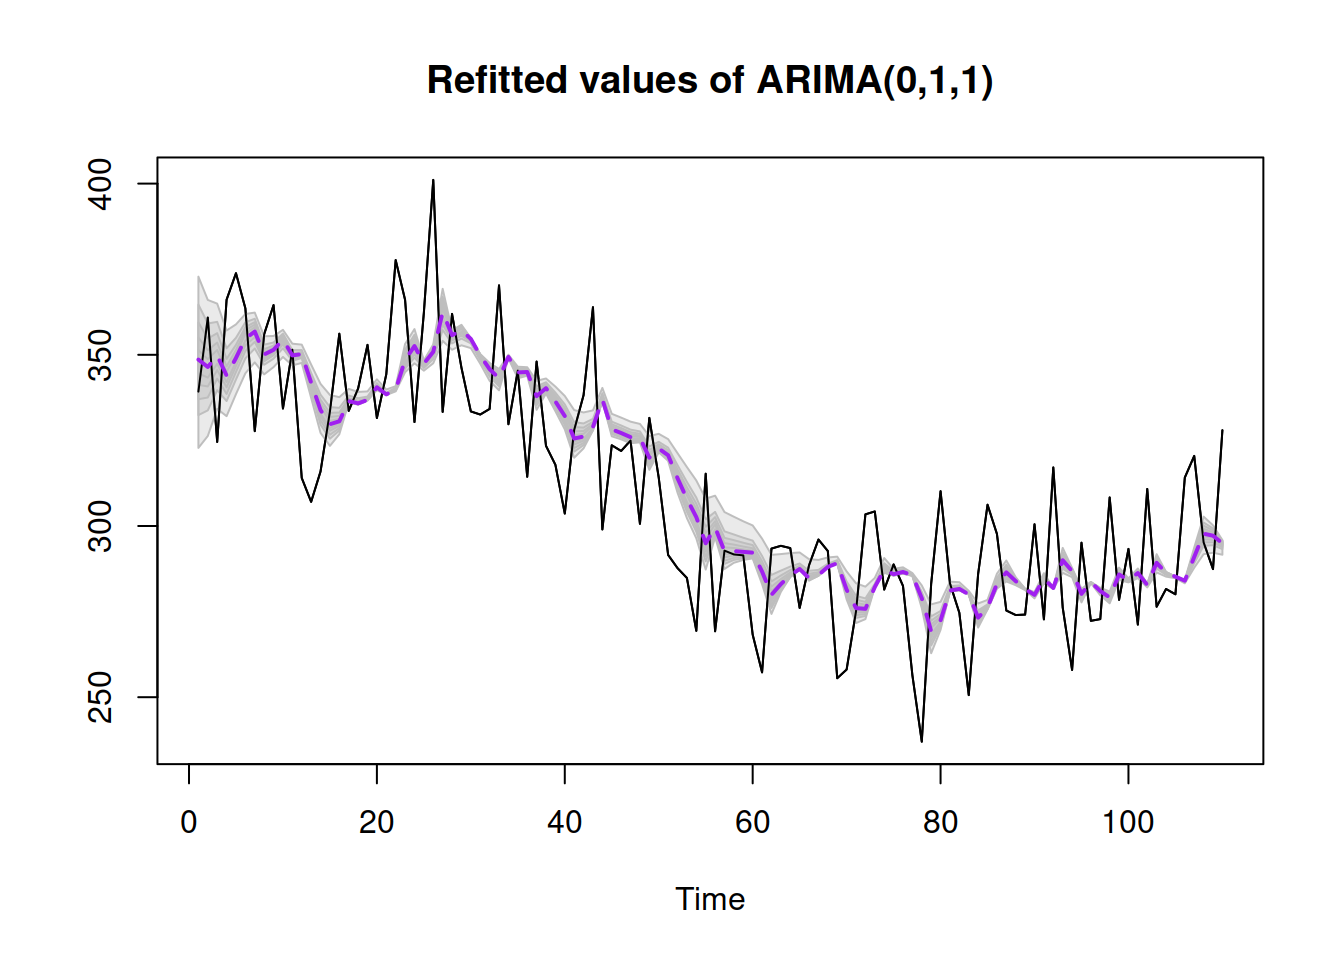 Refitted ADAM ARIMA(0,1,1) model on artificial data.